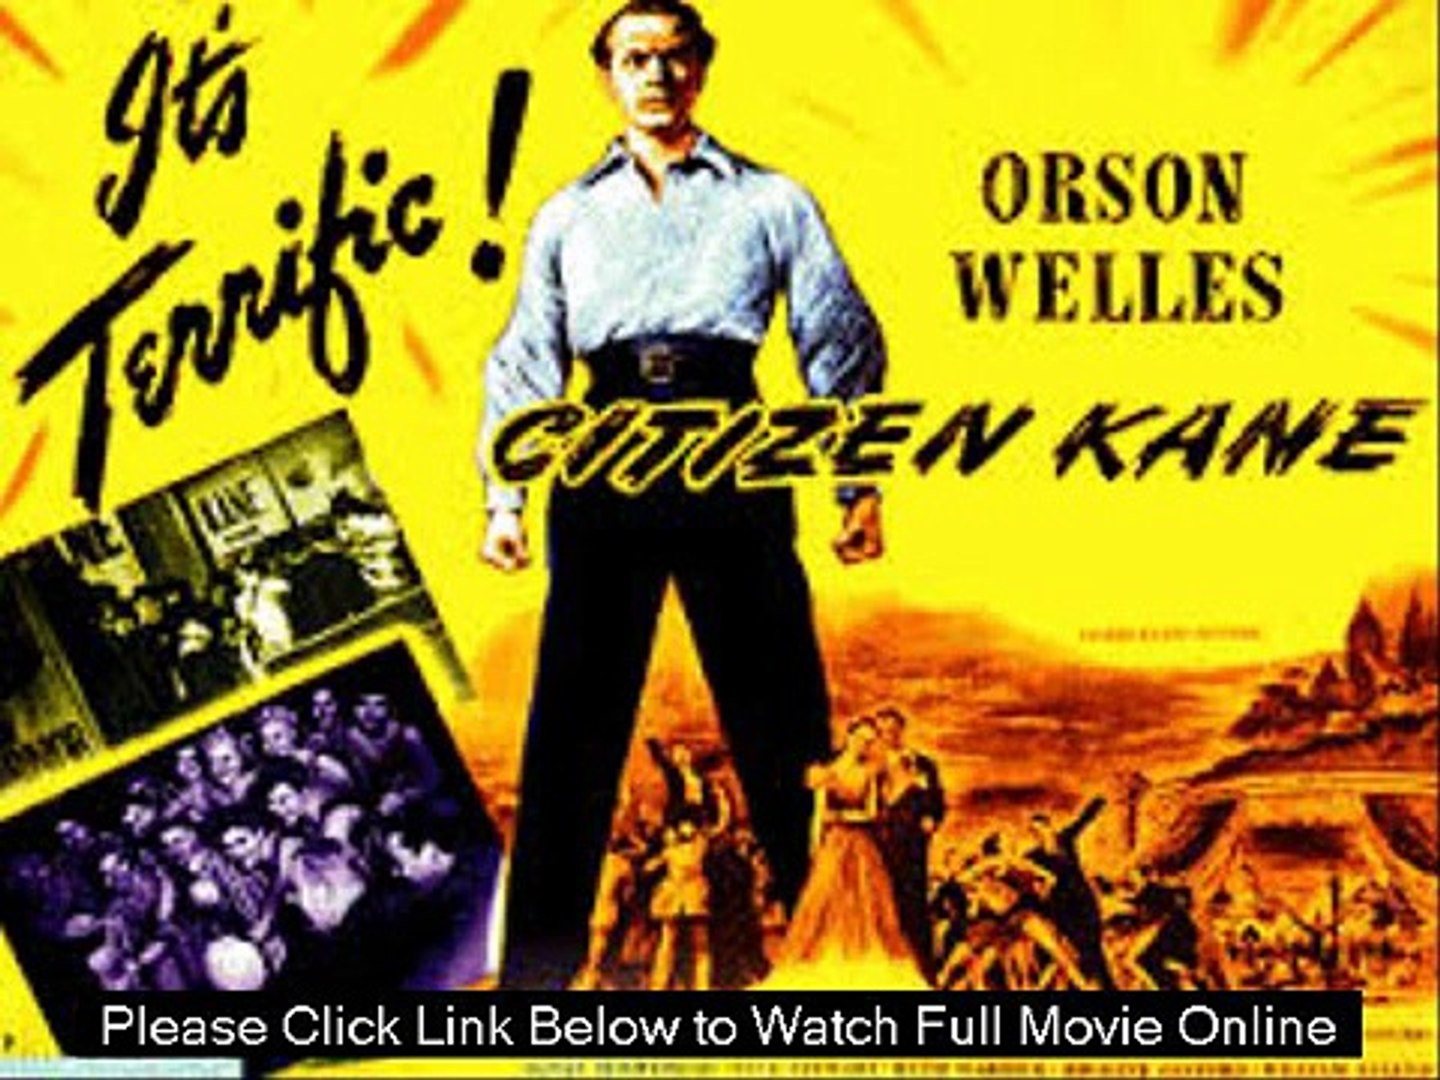 Citizen Kane 1941 Full Movie Online In Hd Quality